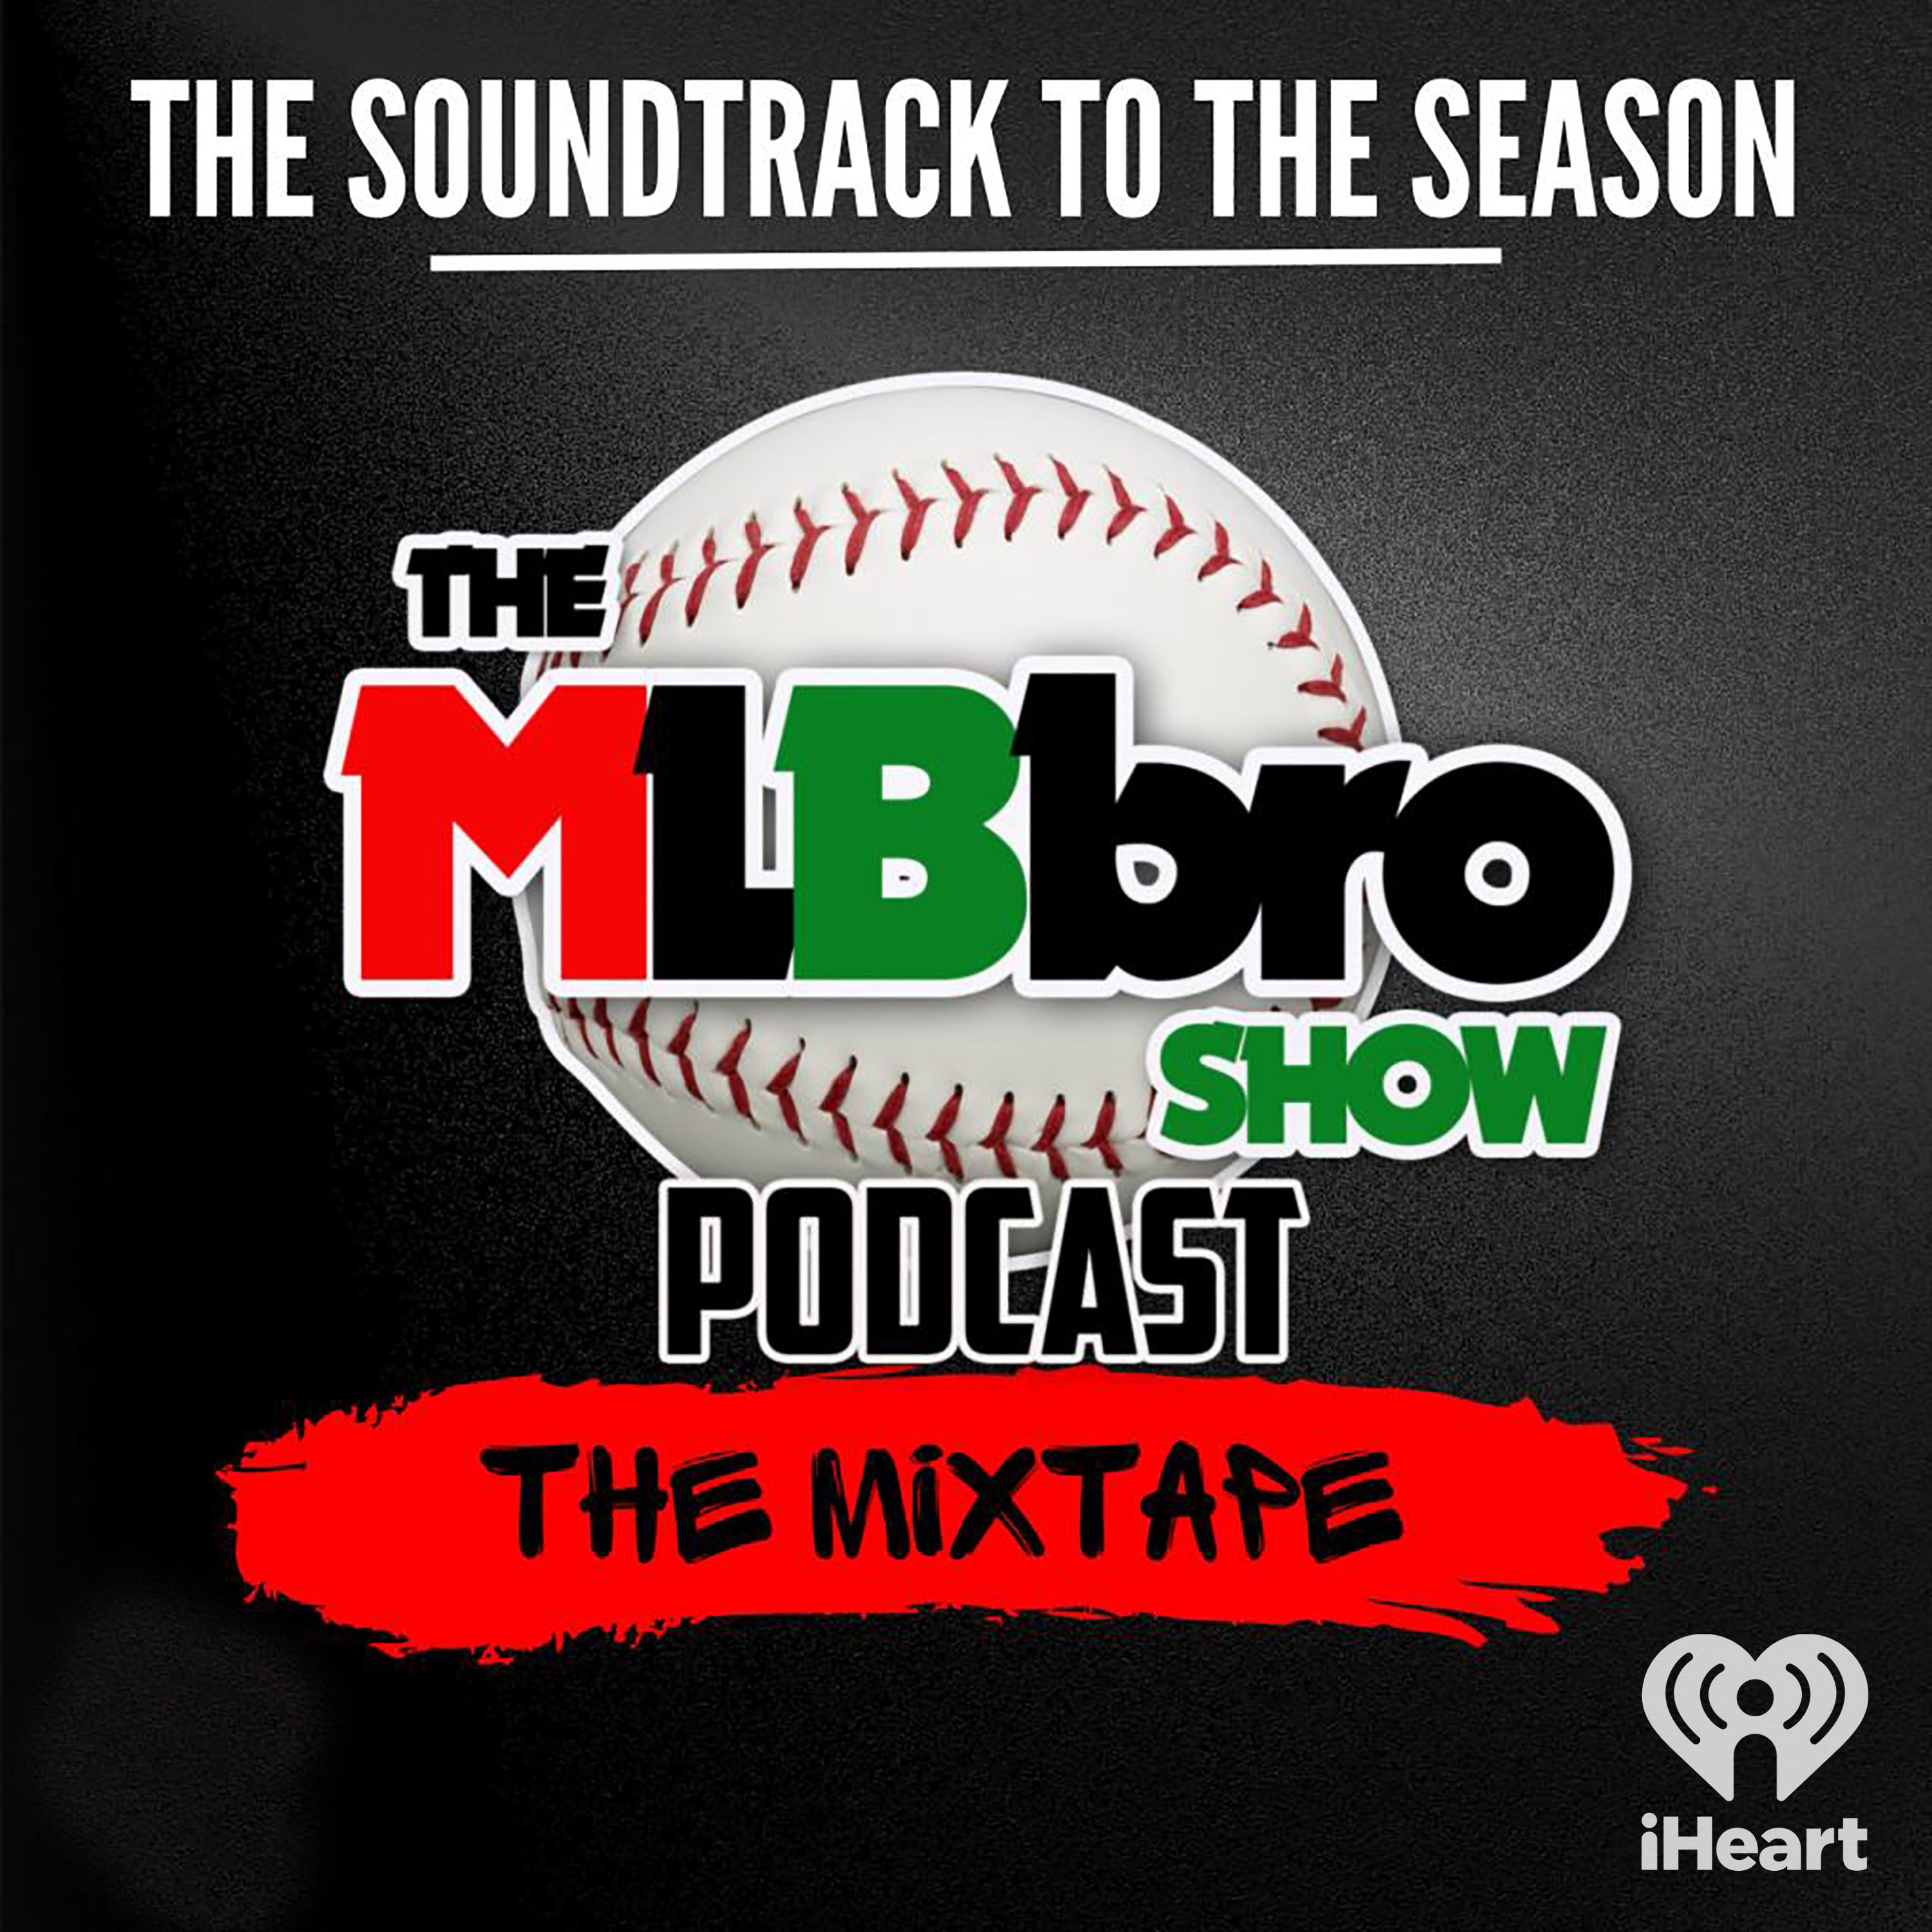 MLBbro Show Podcast The Mixtape Vol 4 Episode 2